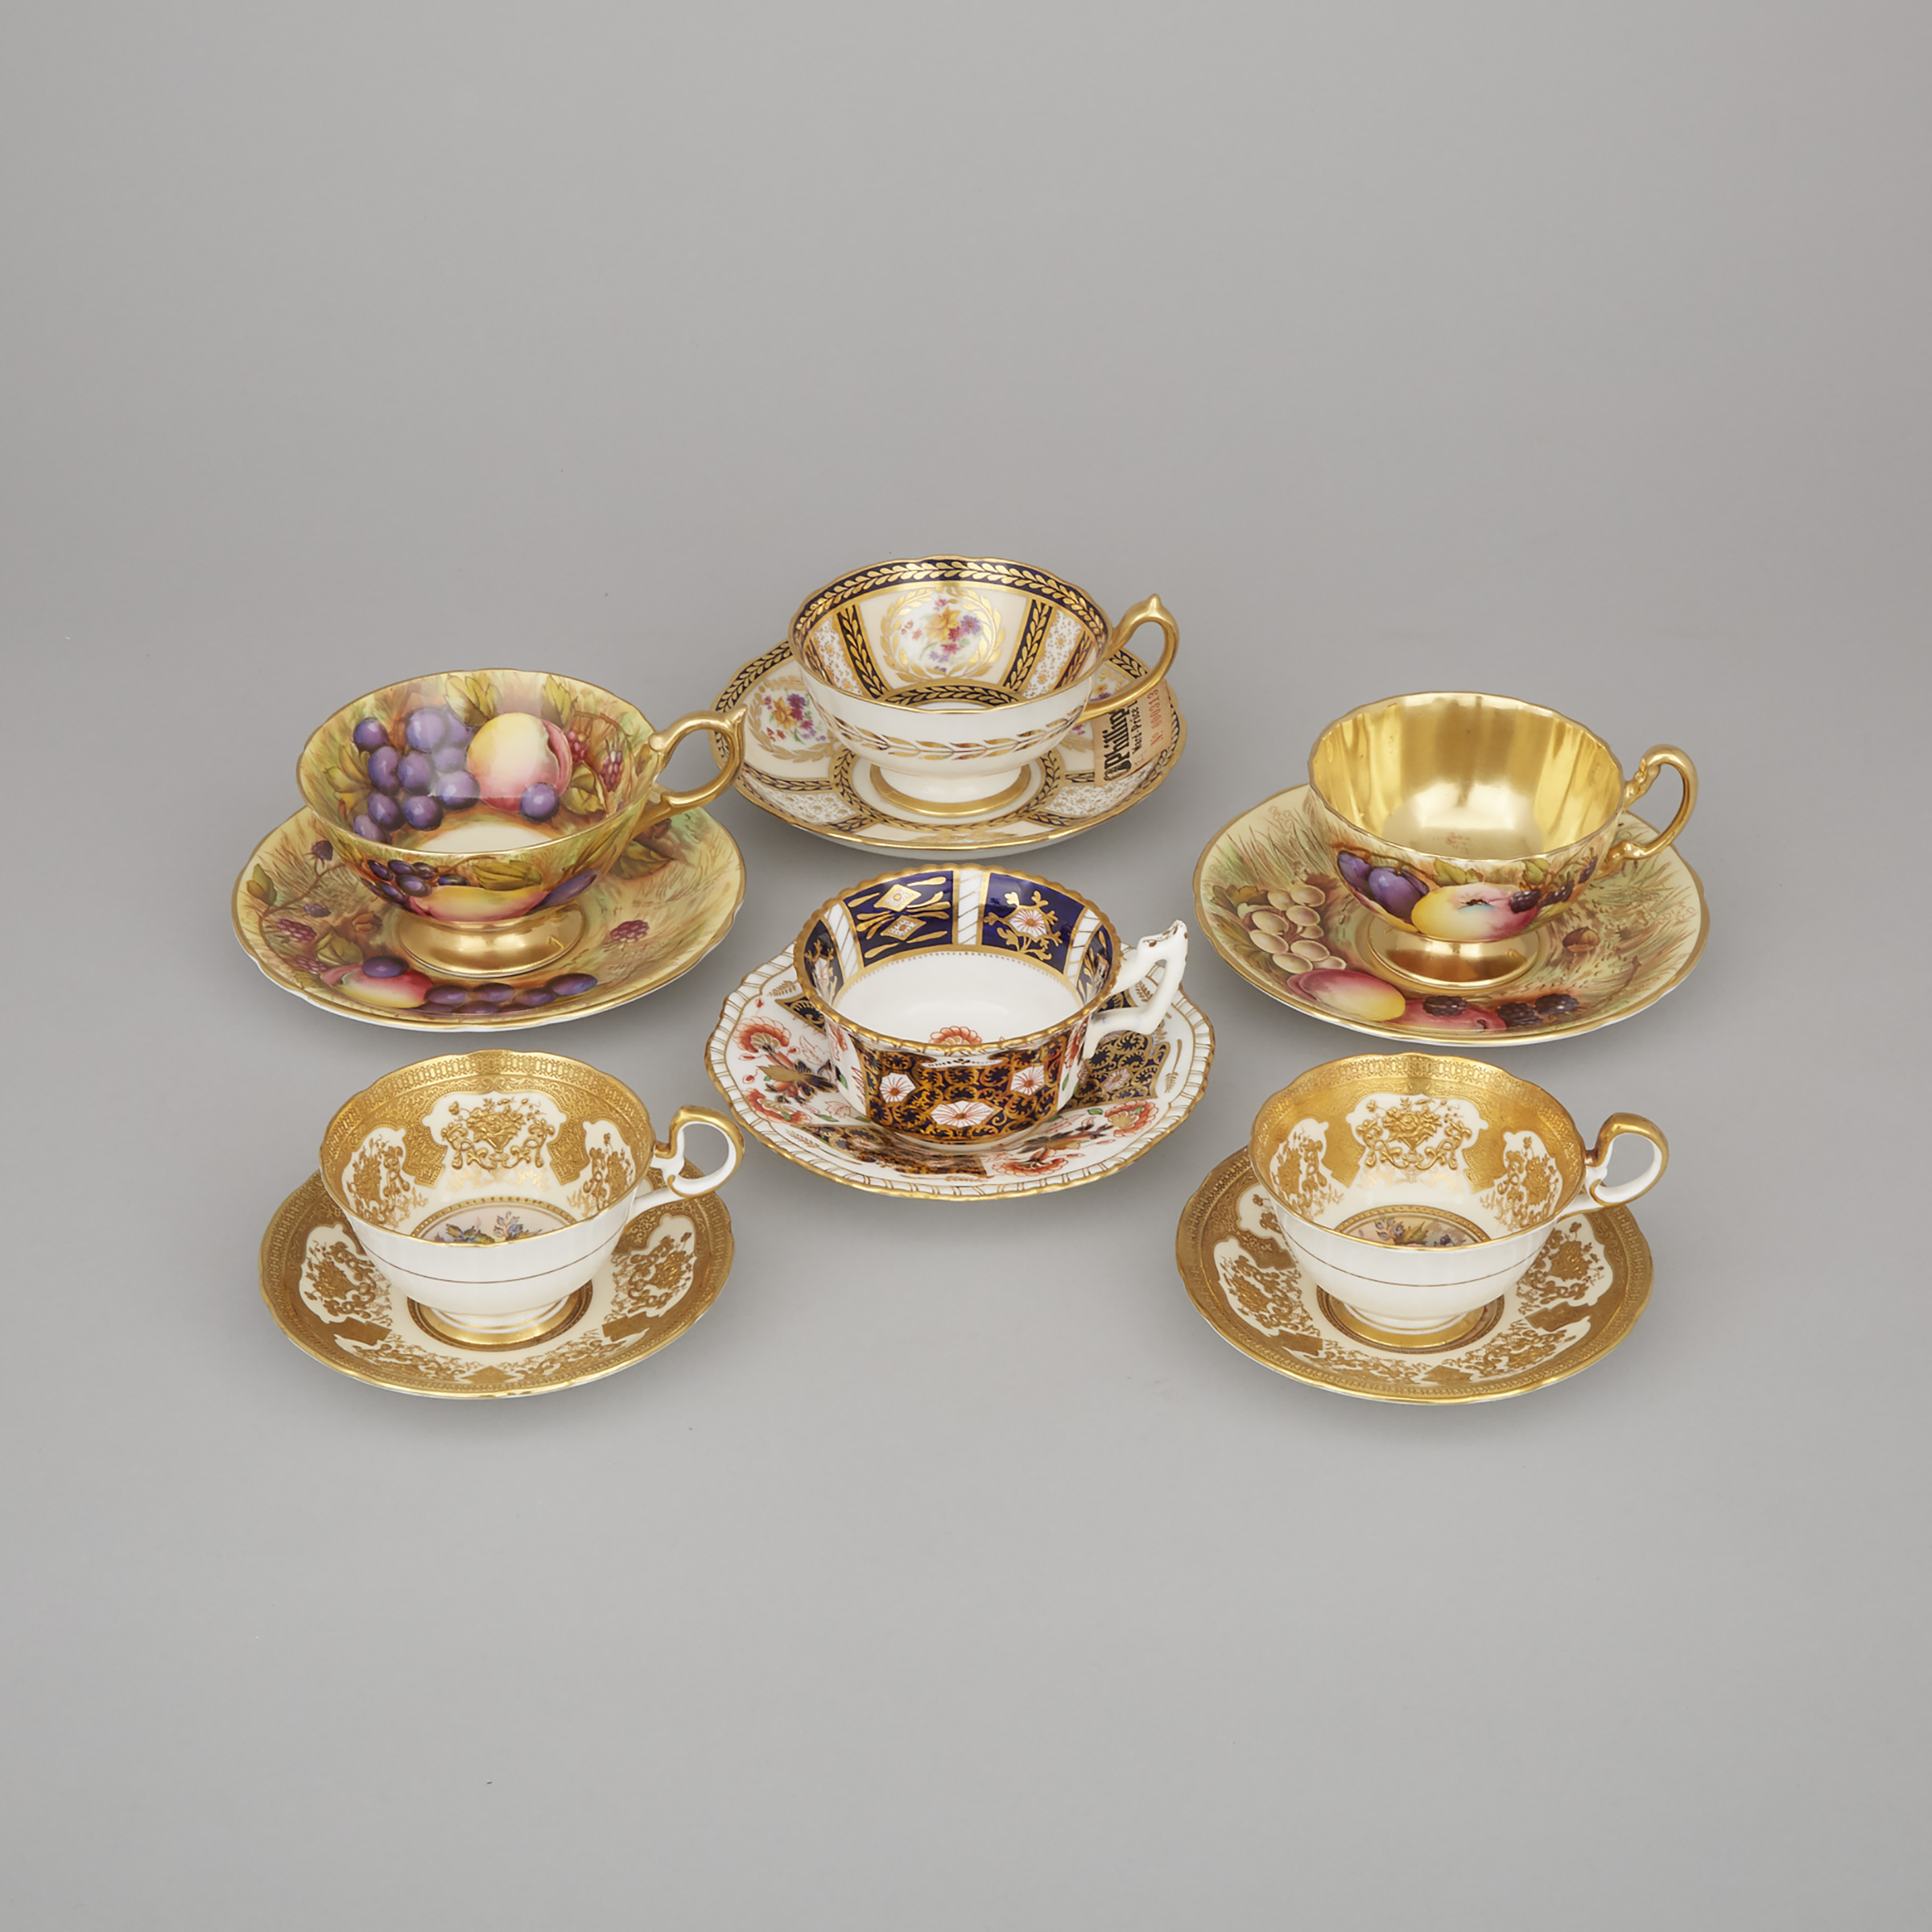 Six Various Aynsley, Royal Paragon and Coalport Tea Cups and Saucers, 20th century